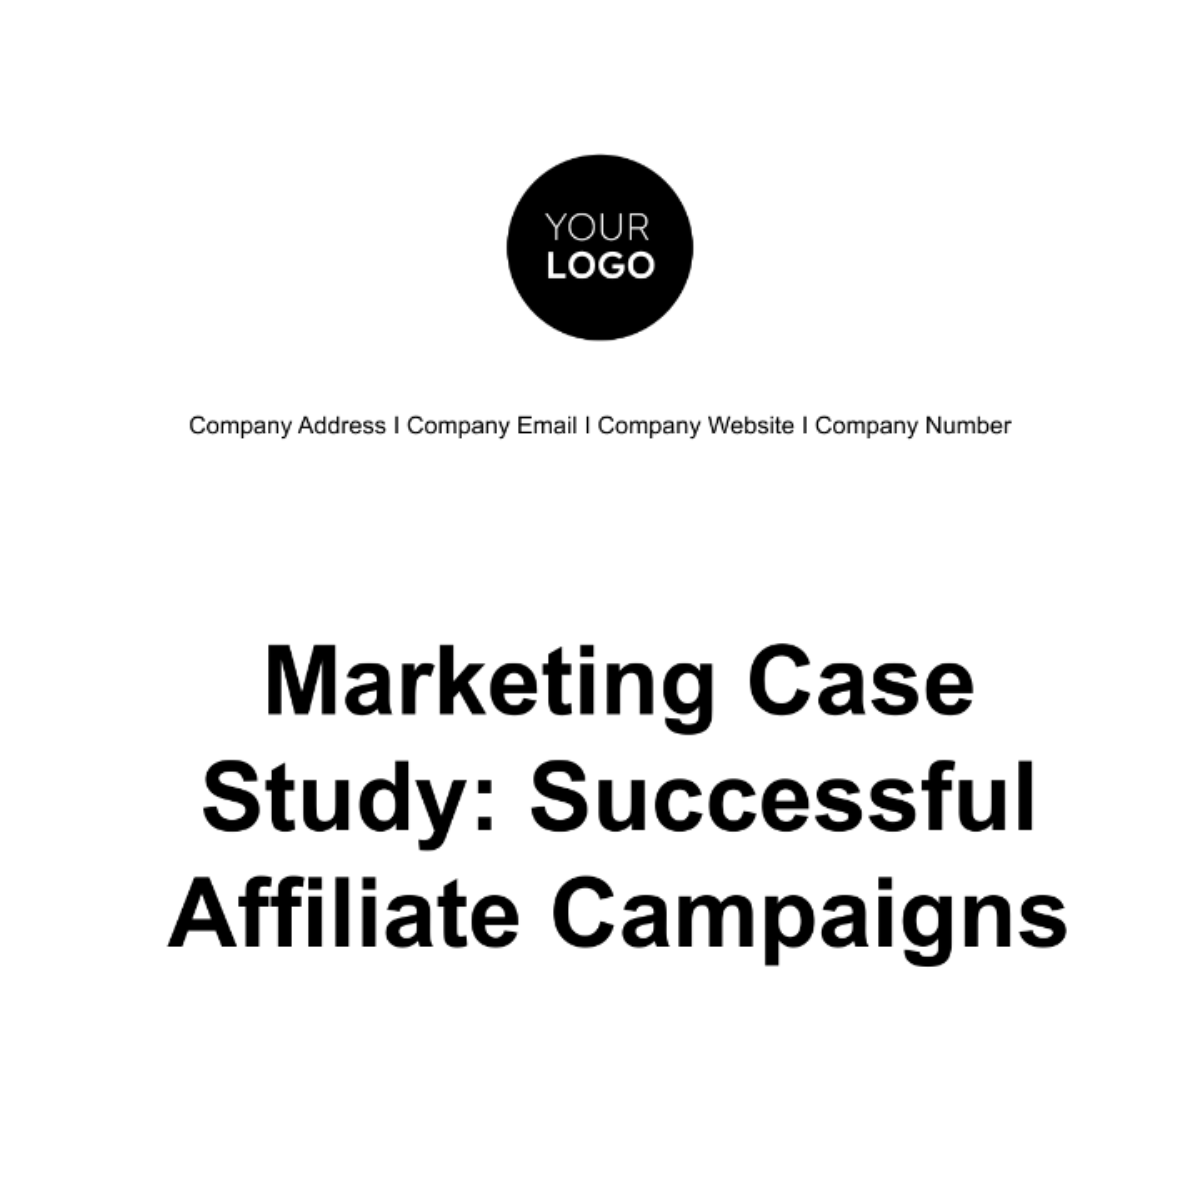 Marketing Case Study: Successful Affiliate Campaigns Template